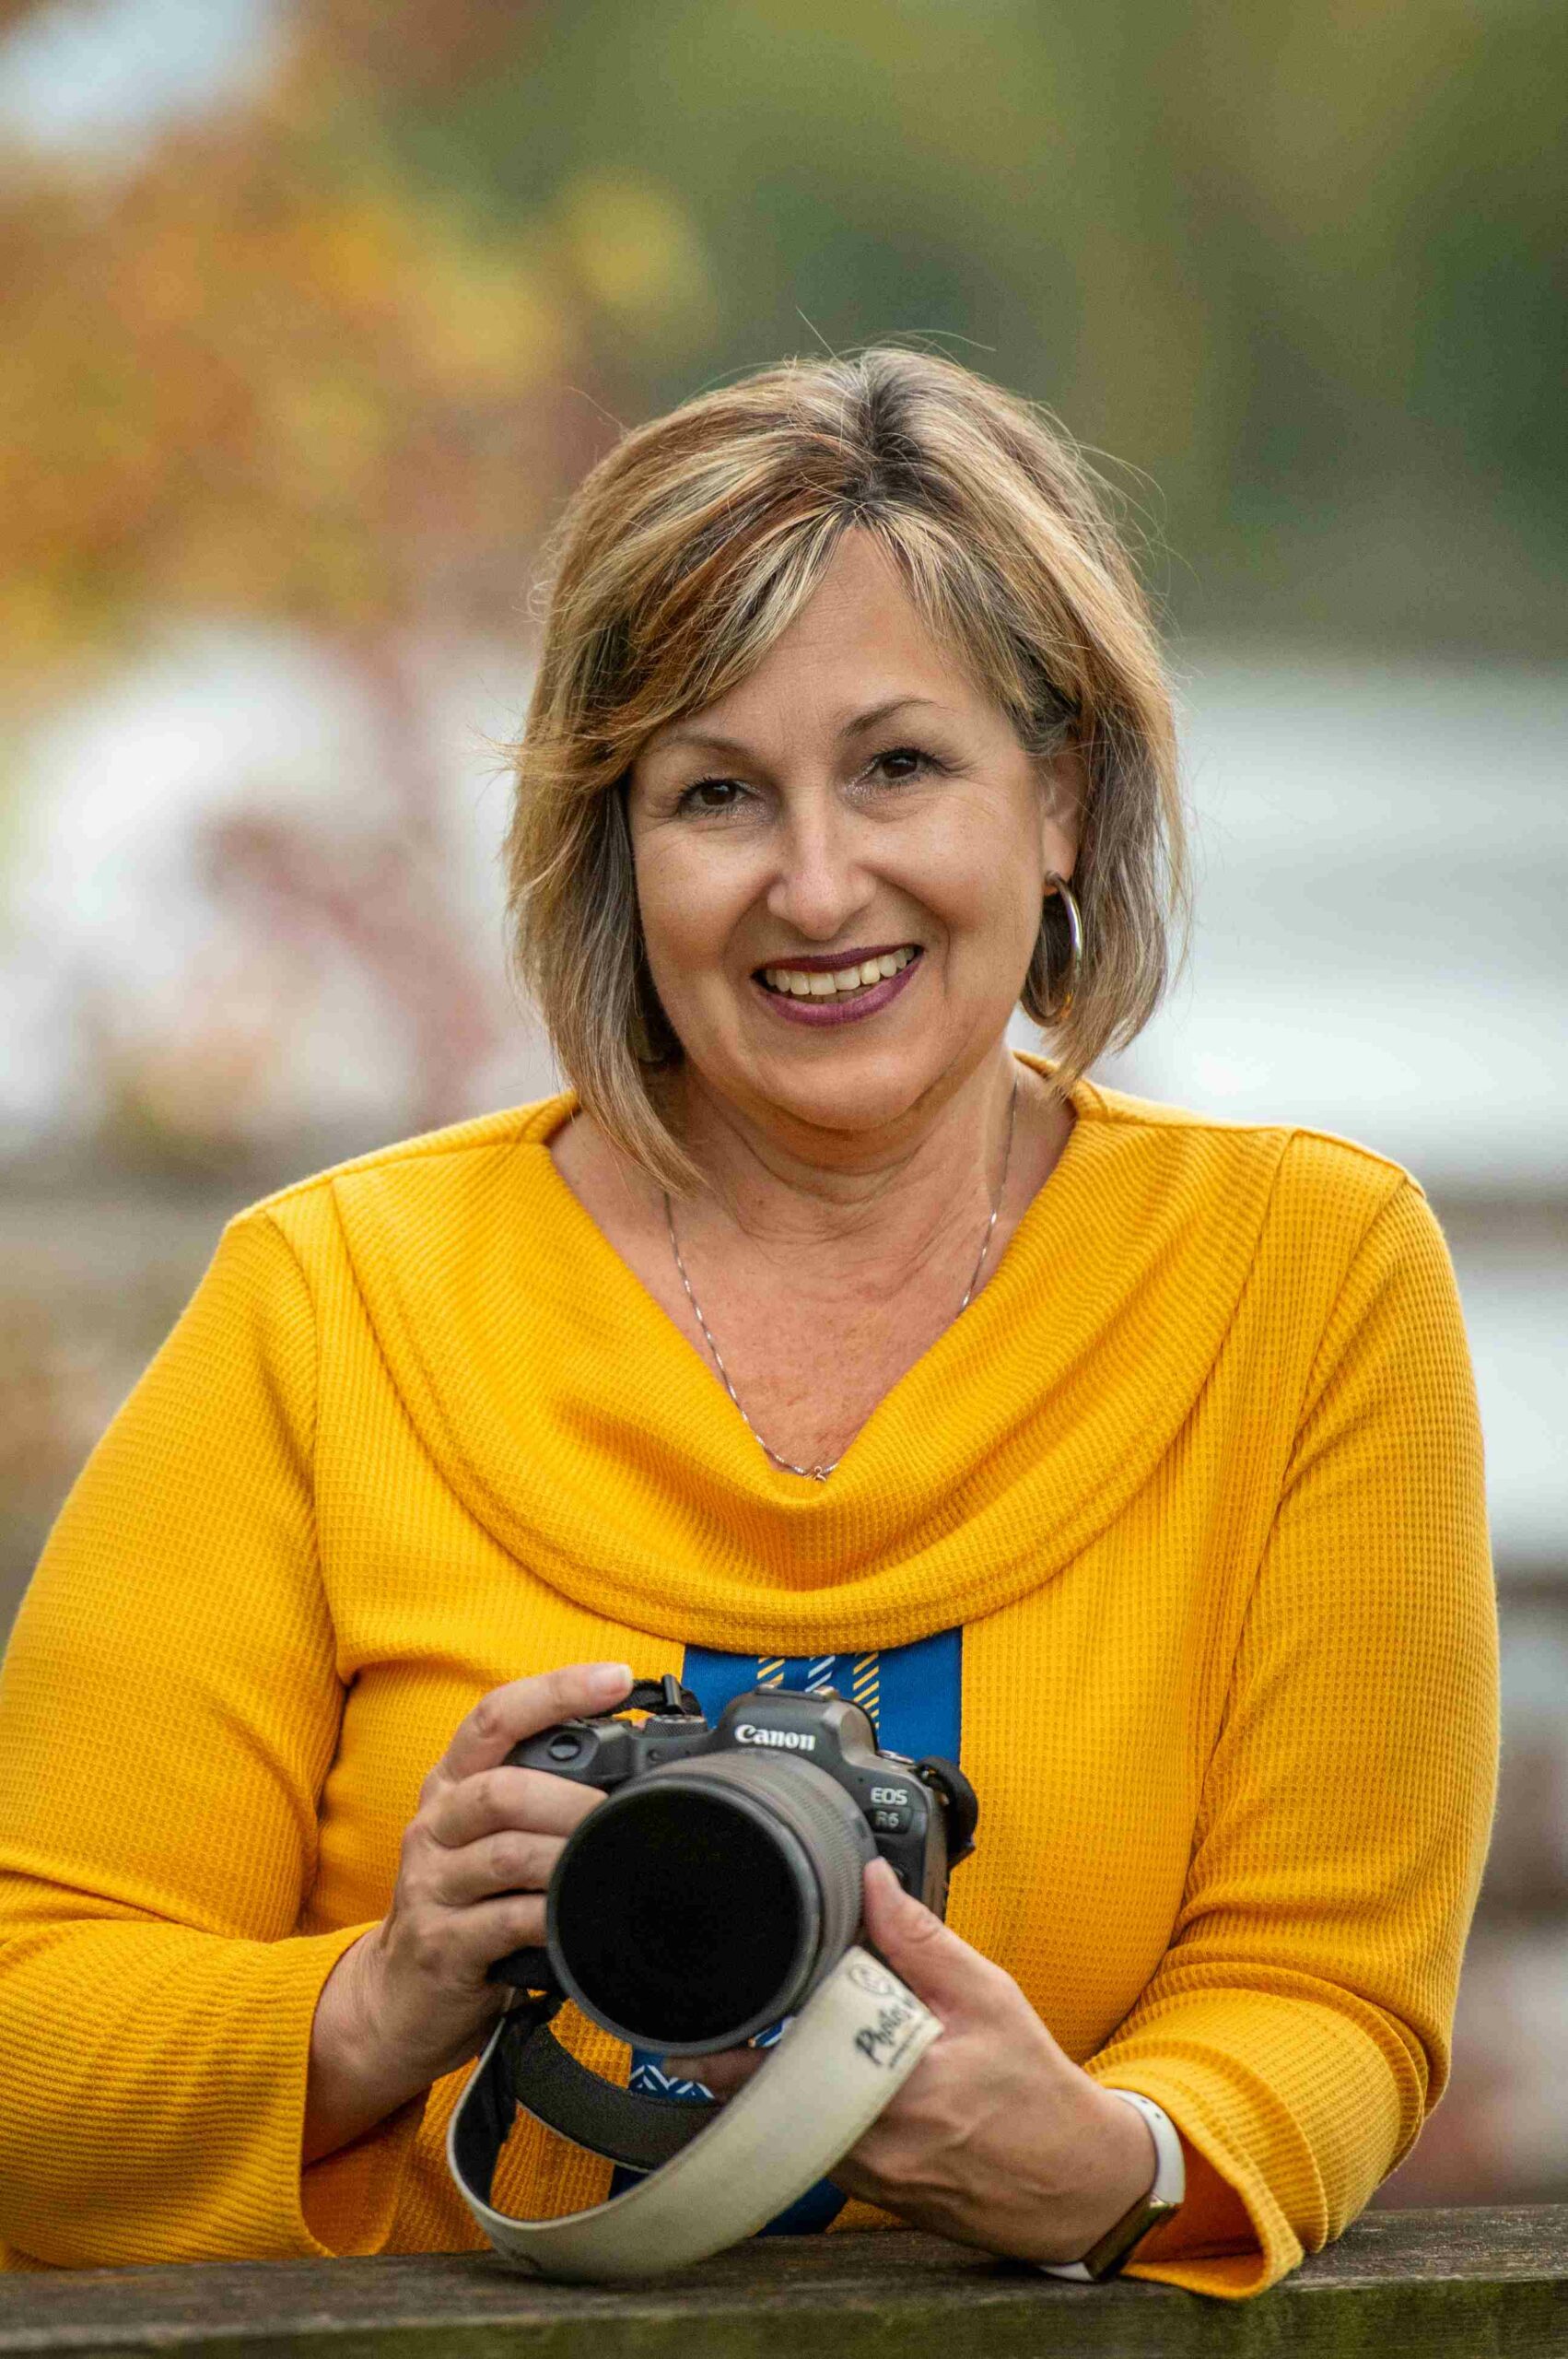 Cheryl Kathler, professional photographer